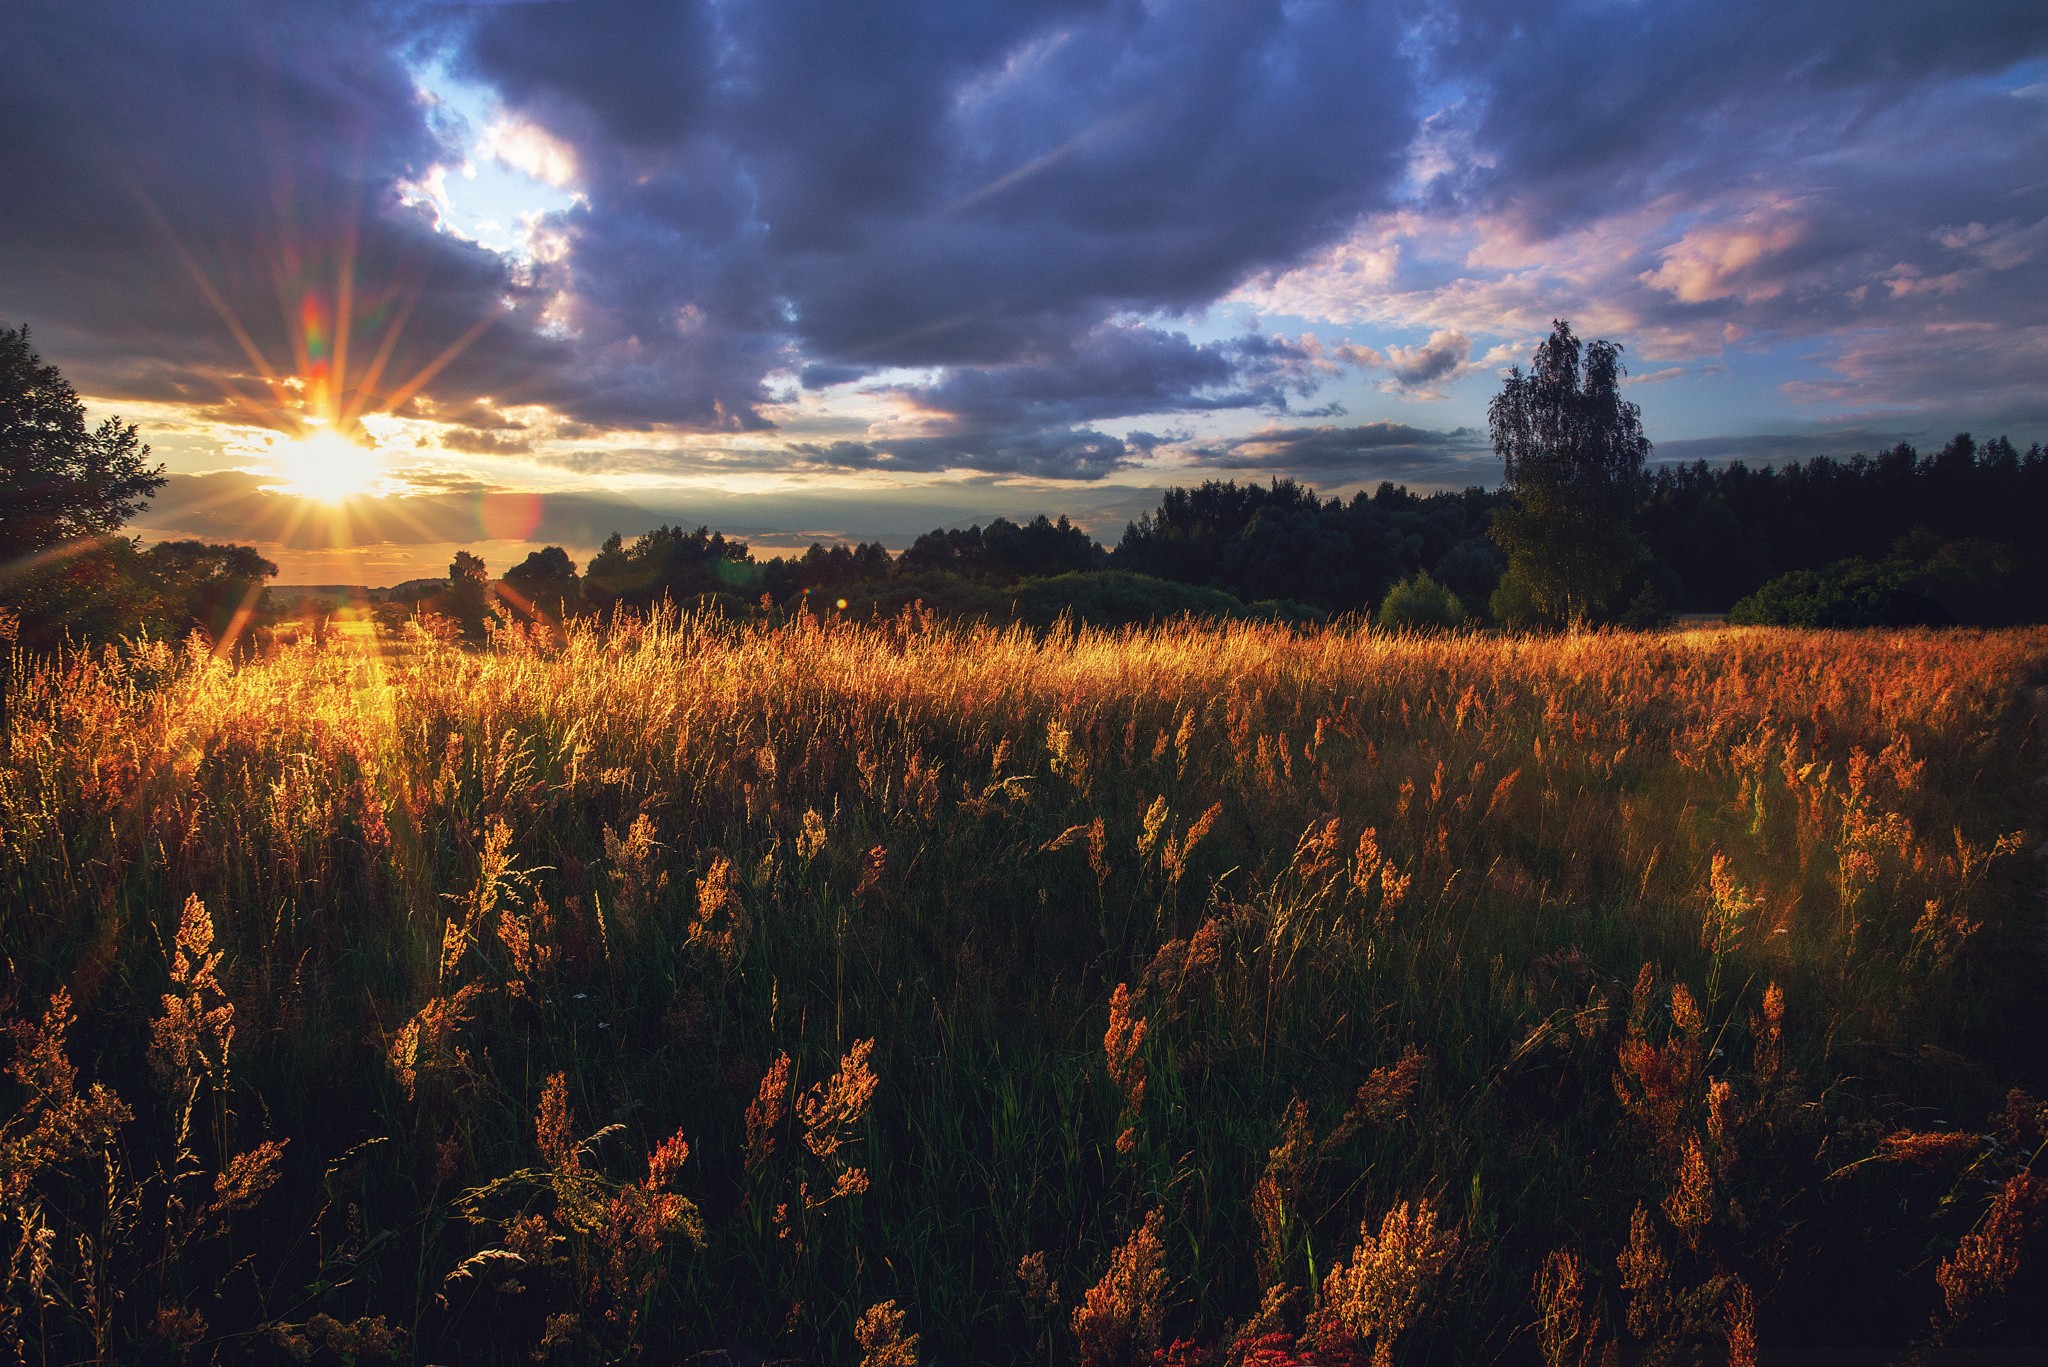 Russia Landscape Field Lens Flare Sunlight Overcast Dry Grass Trees 2048x1367